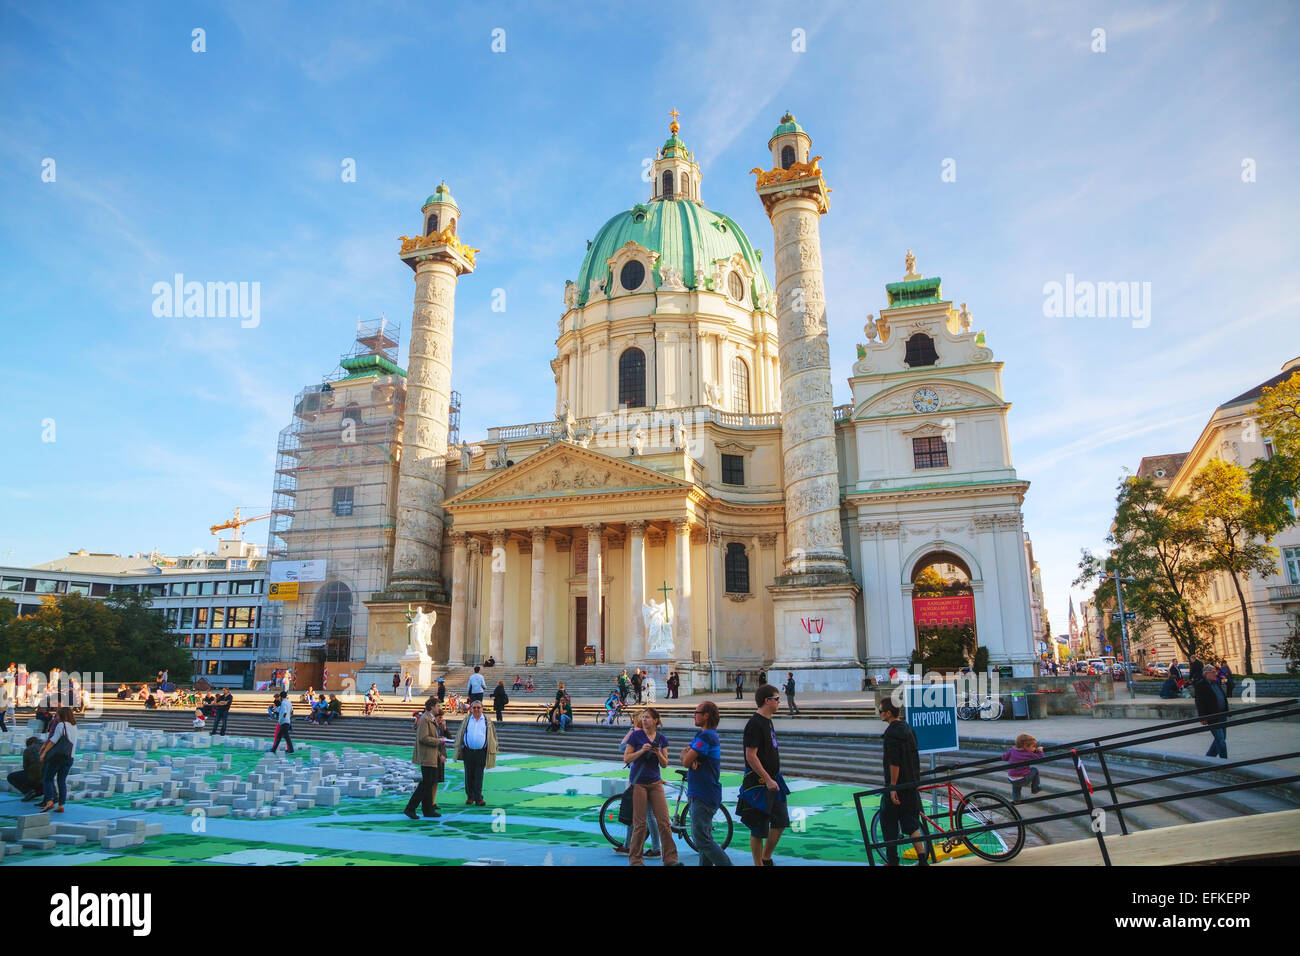 VIENNA - OCTOBER 19: St. Charles's Church (Karlskirche) on October 19, 2014 in Vienna. Stock Photo